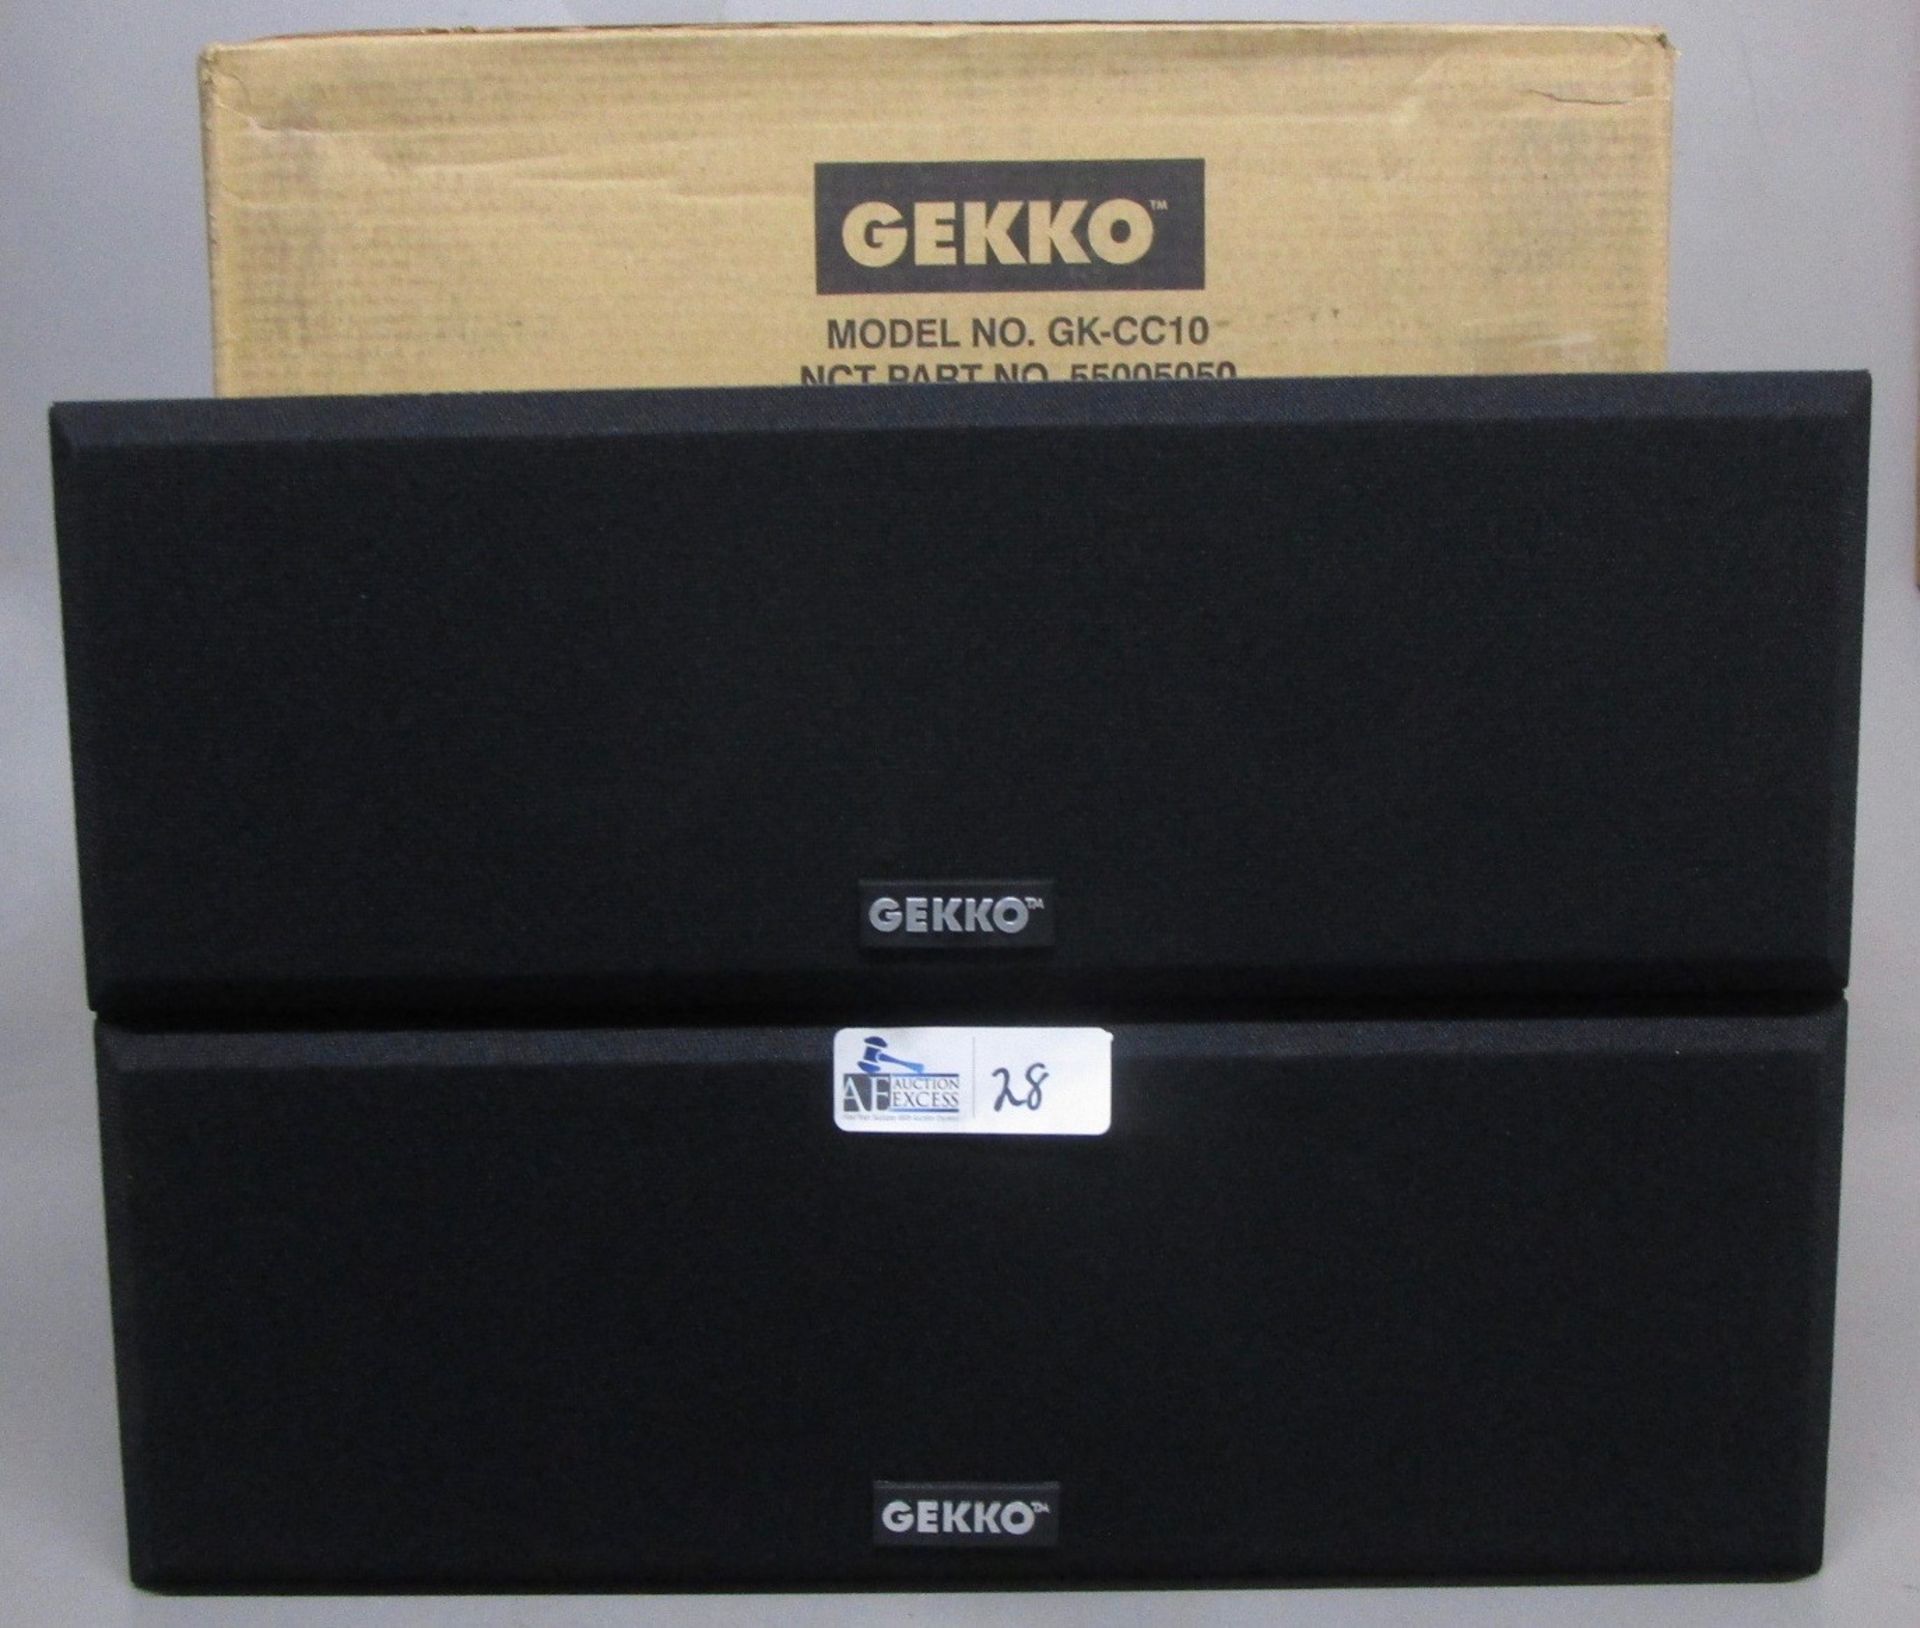 LOTOF 2 GEKKO GK-CC10 CENTER CHANNEL SPEAKERS IN ORIGINAL BOXES